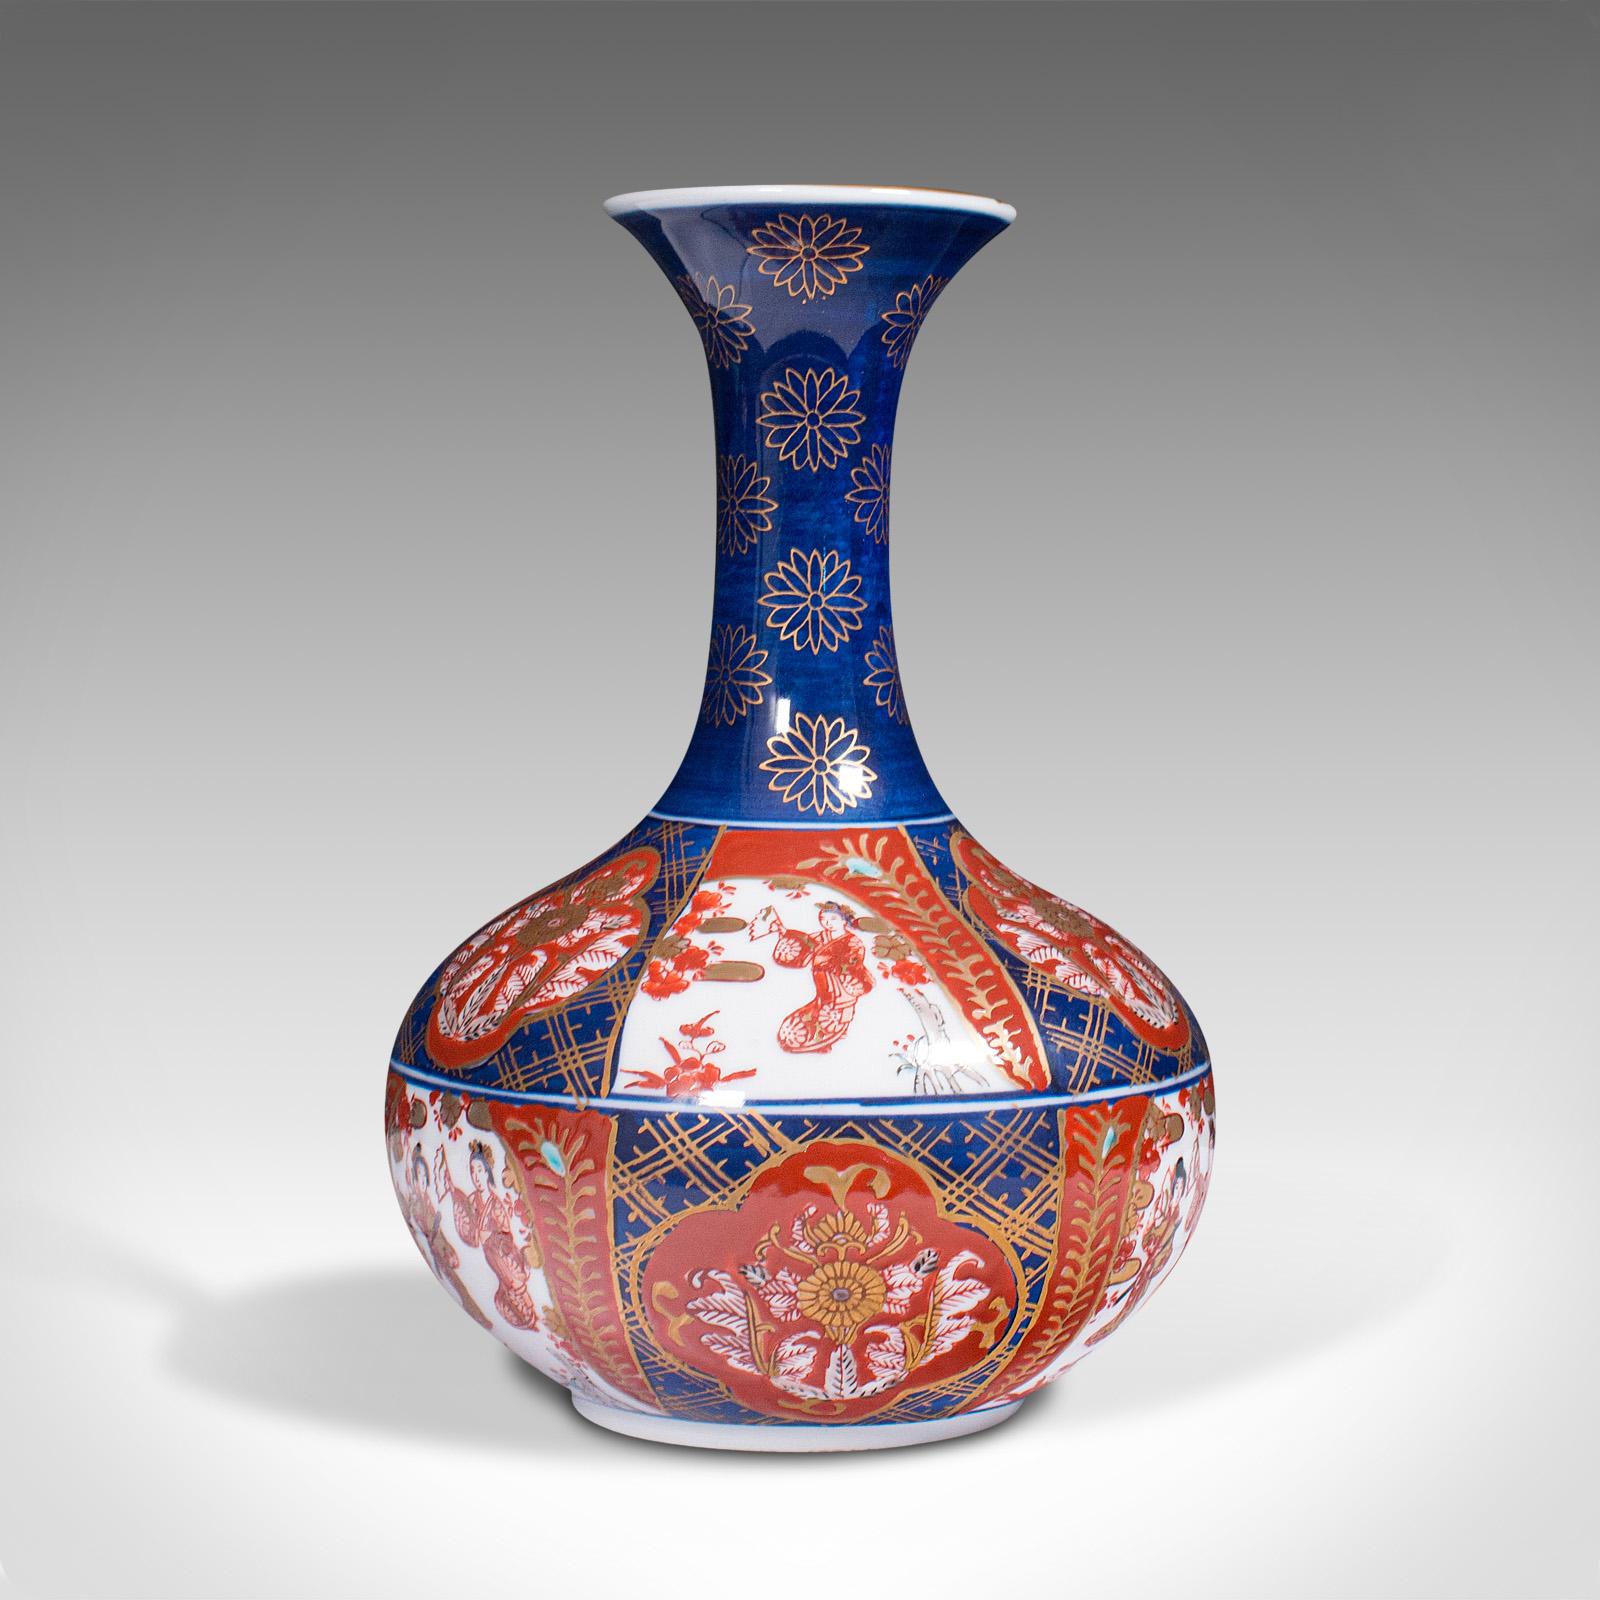 20th Century Vintage Imari Revival Flower Vase, Chinese, Ceramic, Decorative, Display Urn For Sale